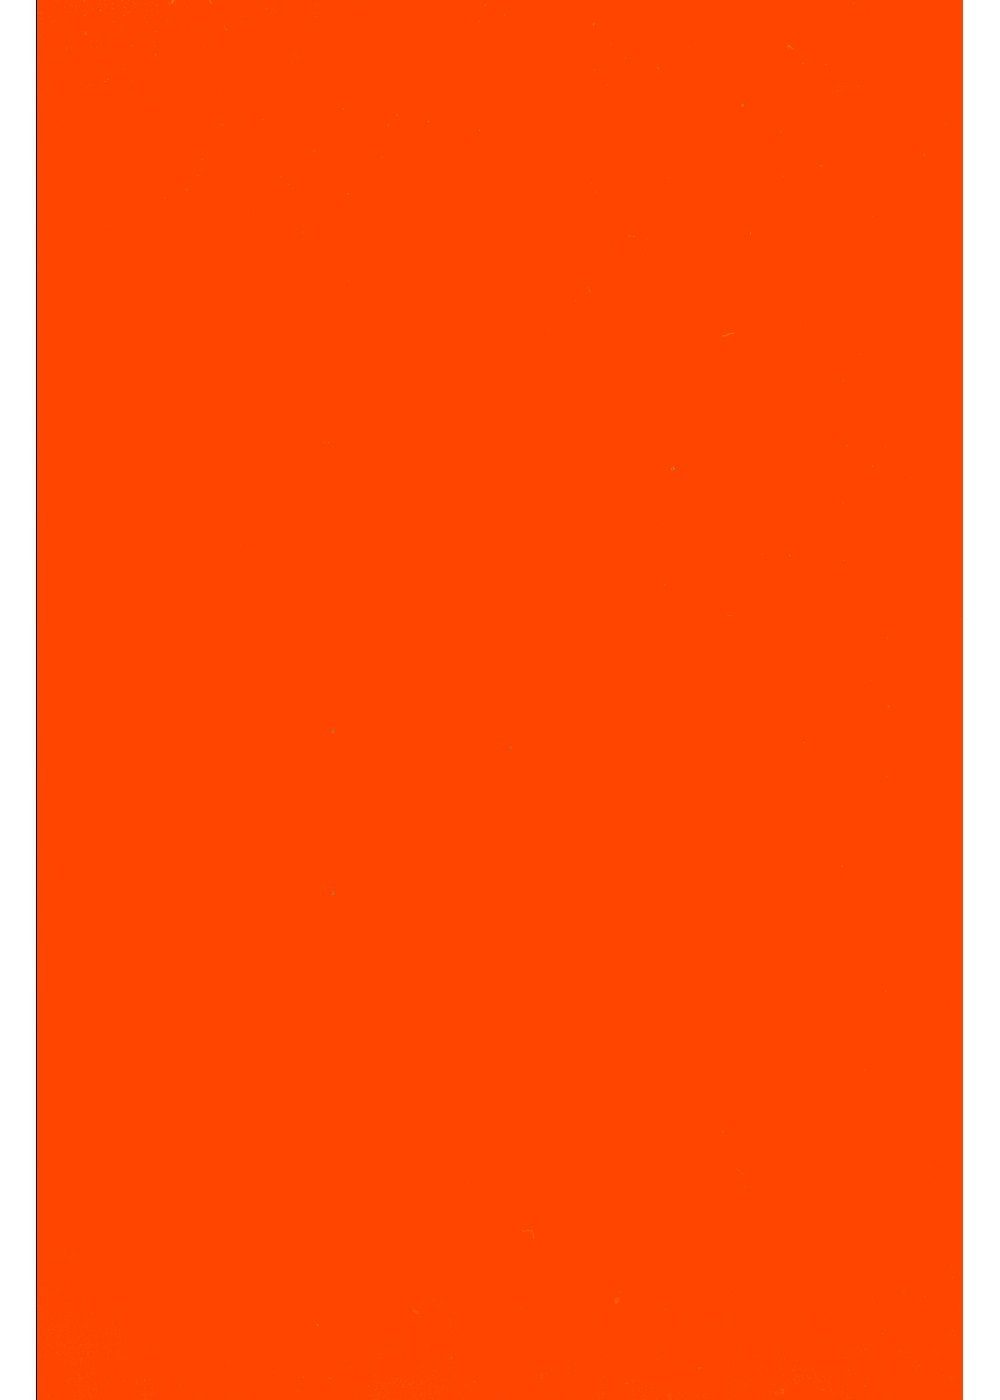 zum Hilltop Orange Plottern Aufbügeln - perfekt zum A4 Transparentpapier Transferfolie/Textilfolie